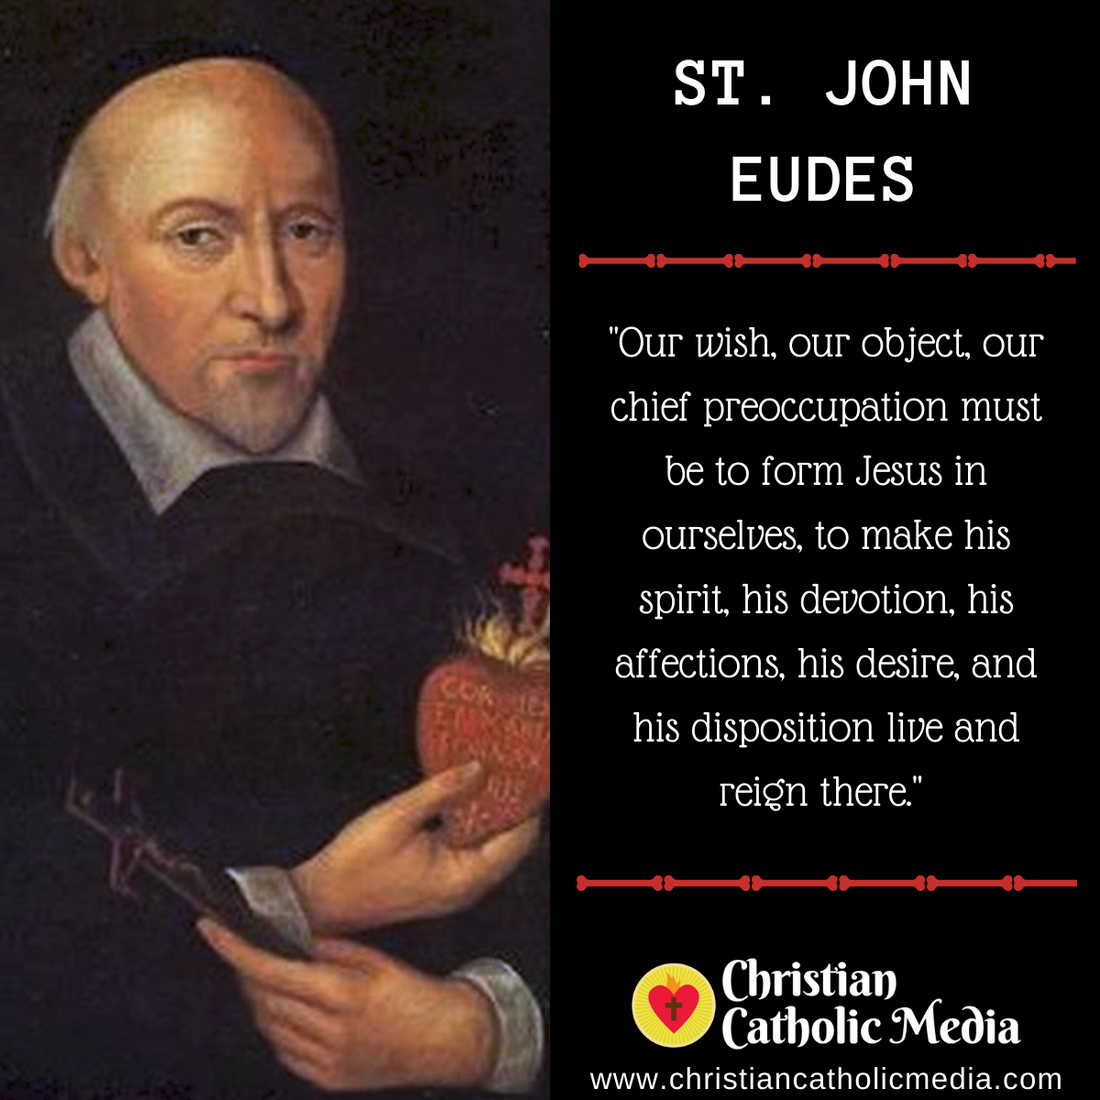 St. John Eudes - Wednesday August 19, 2020